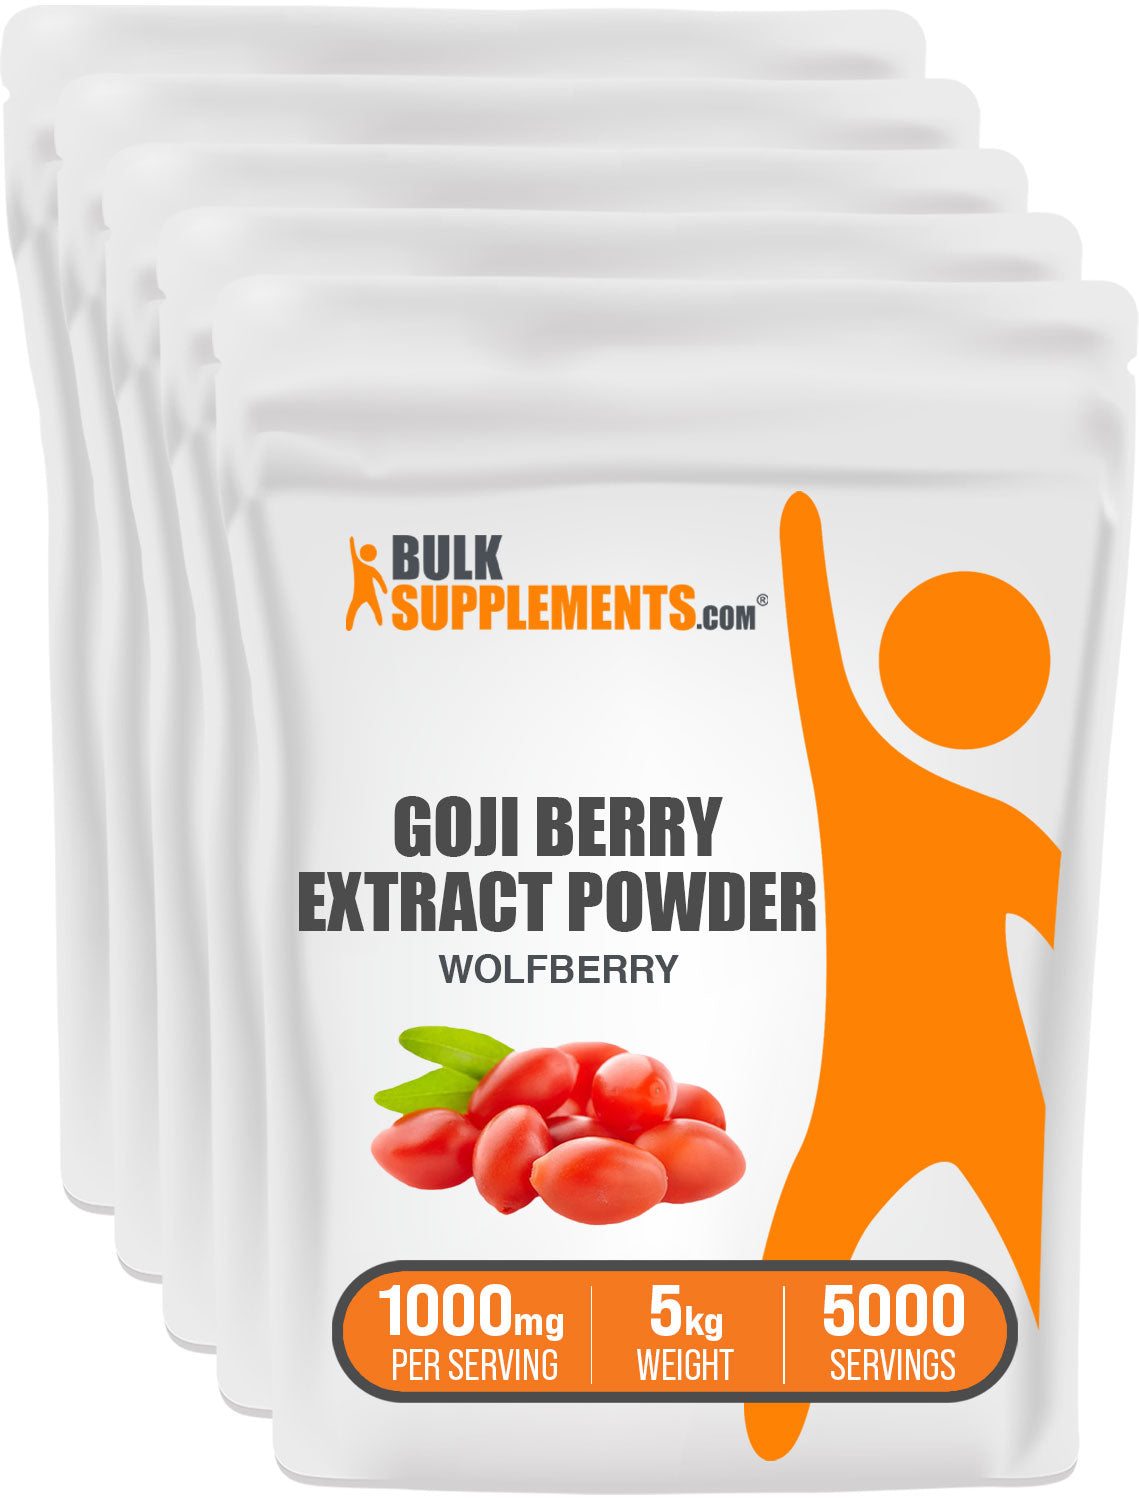 BulkSupplements Goji Berry Extract Powder Wolfberry 5kg bag